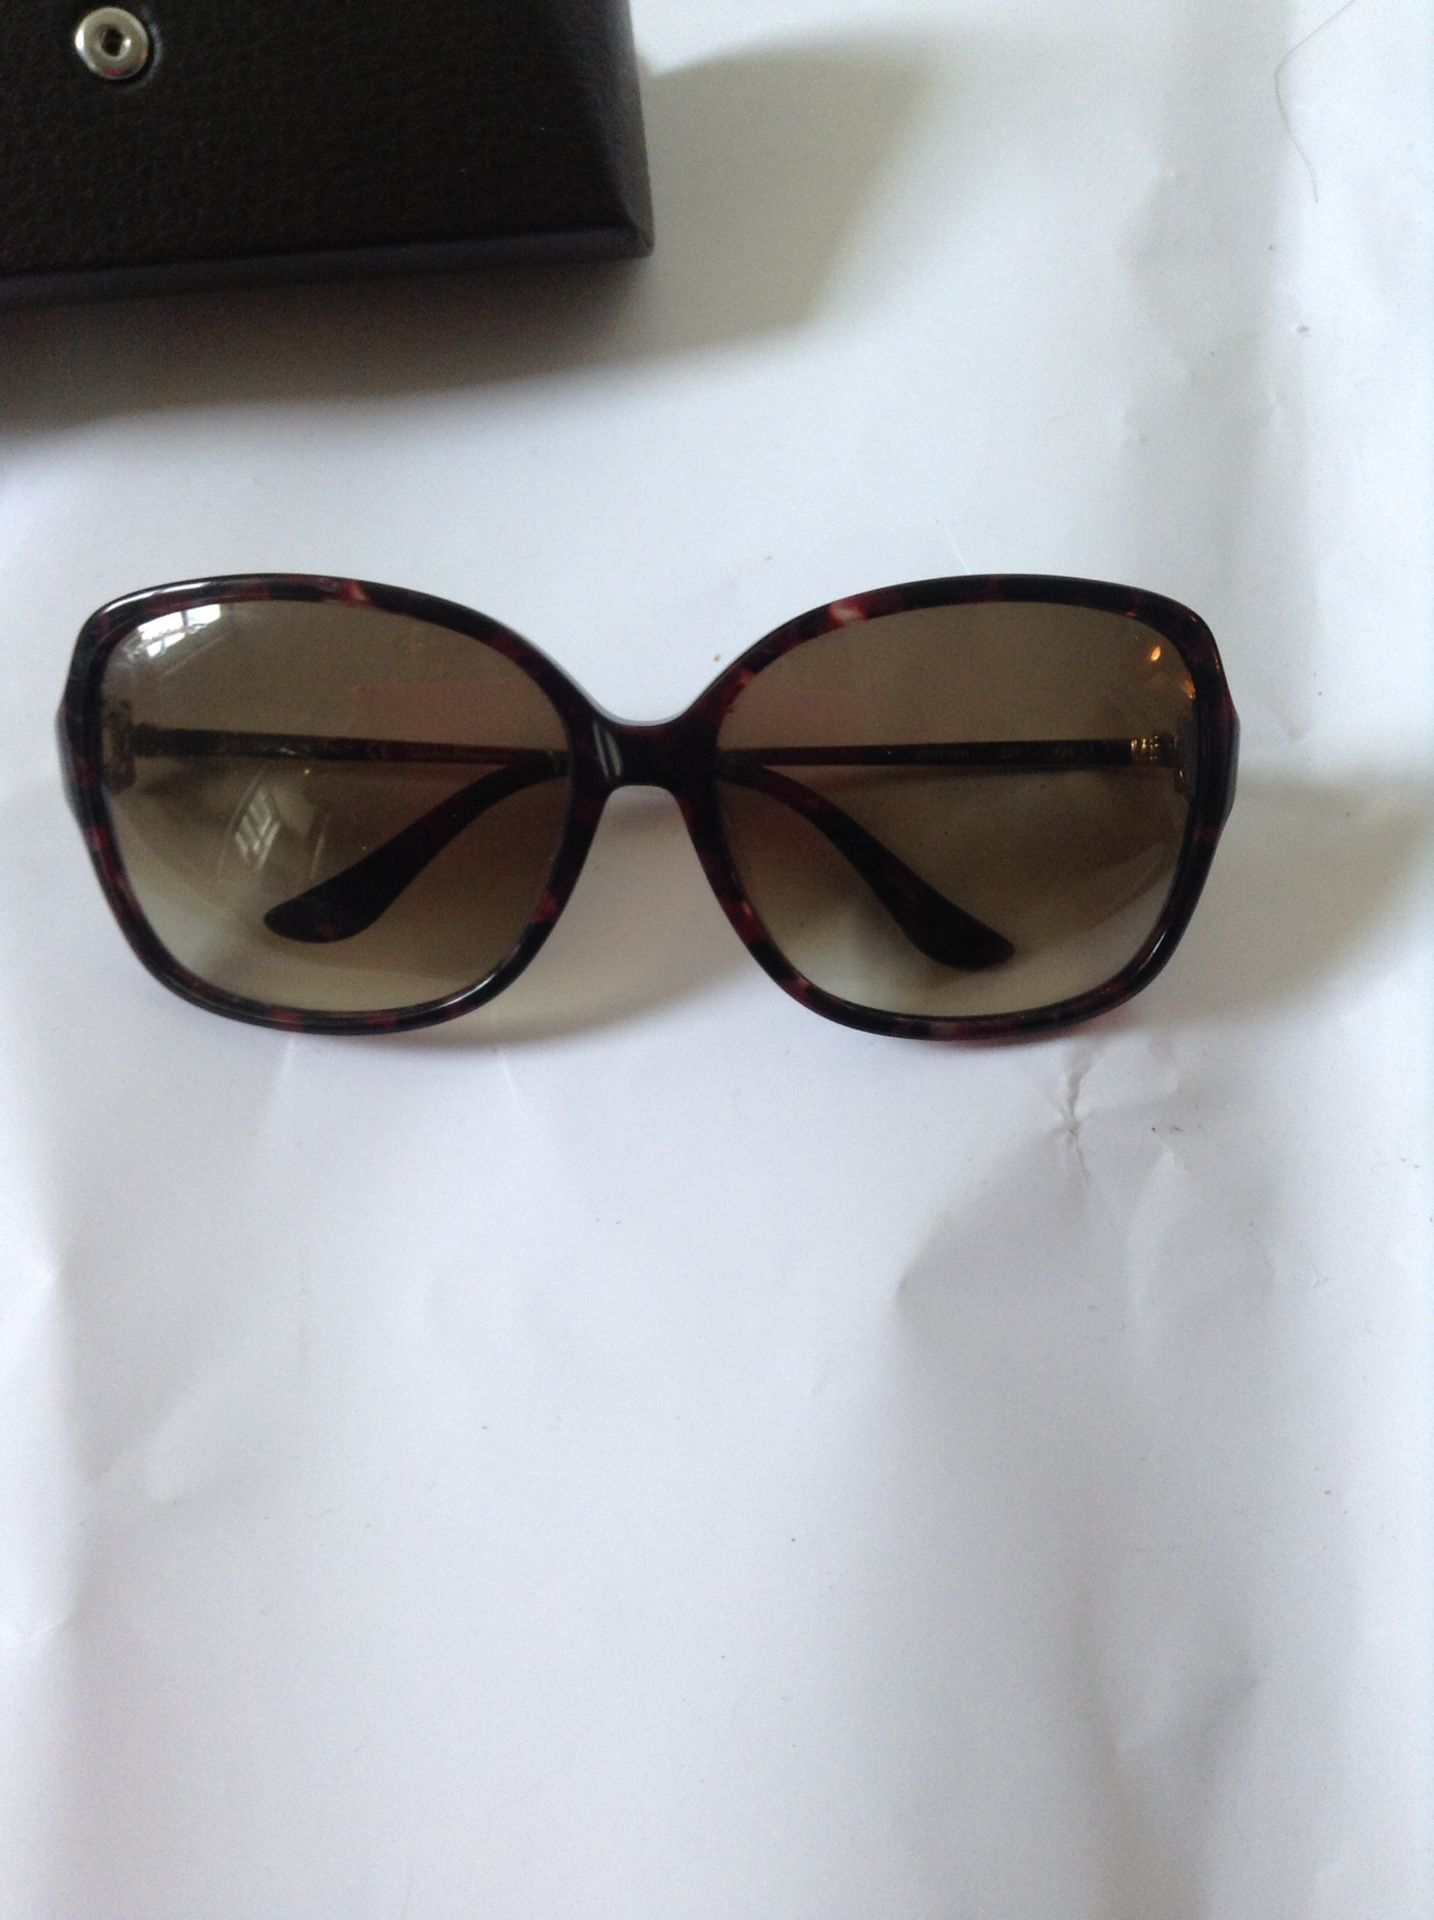 Sunglasses from Salvatore Ferraganna